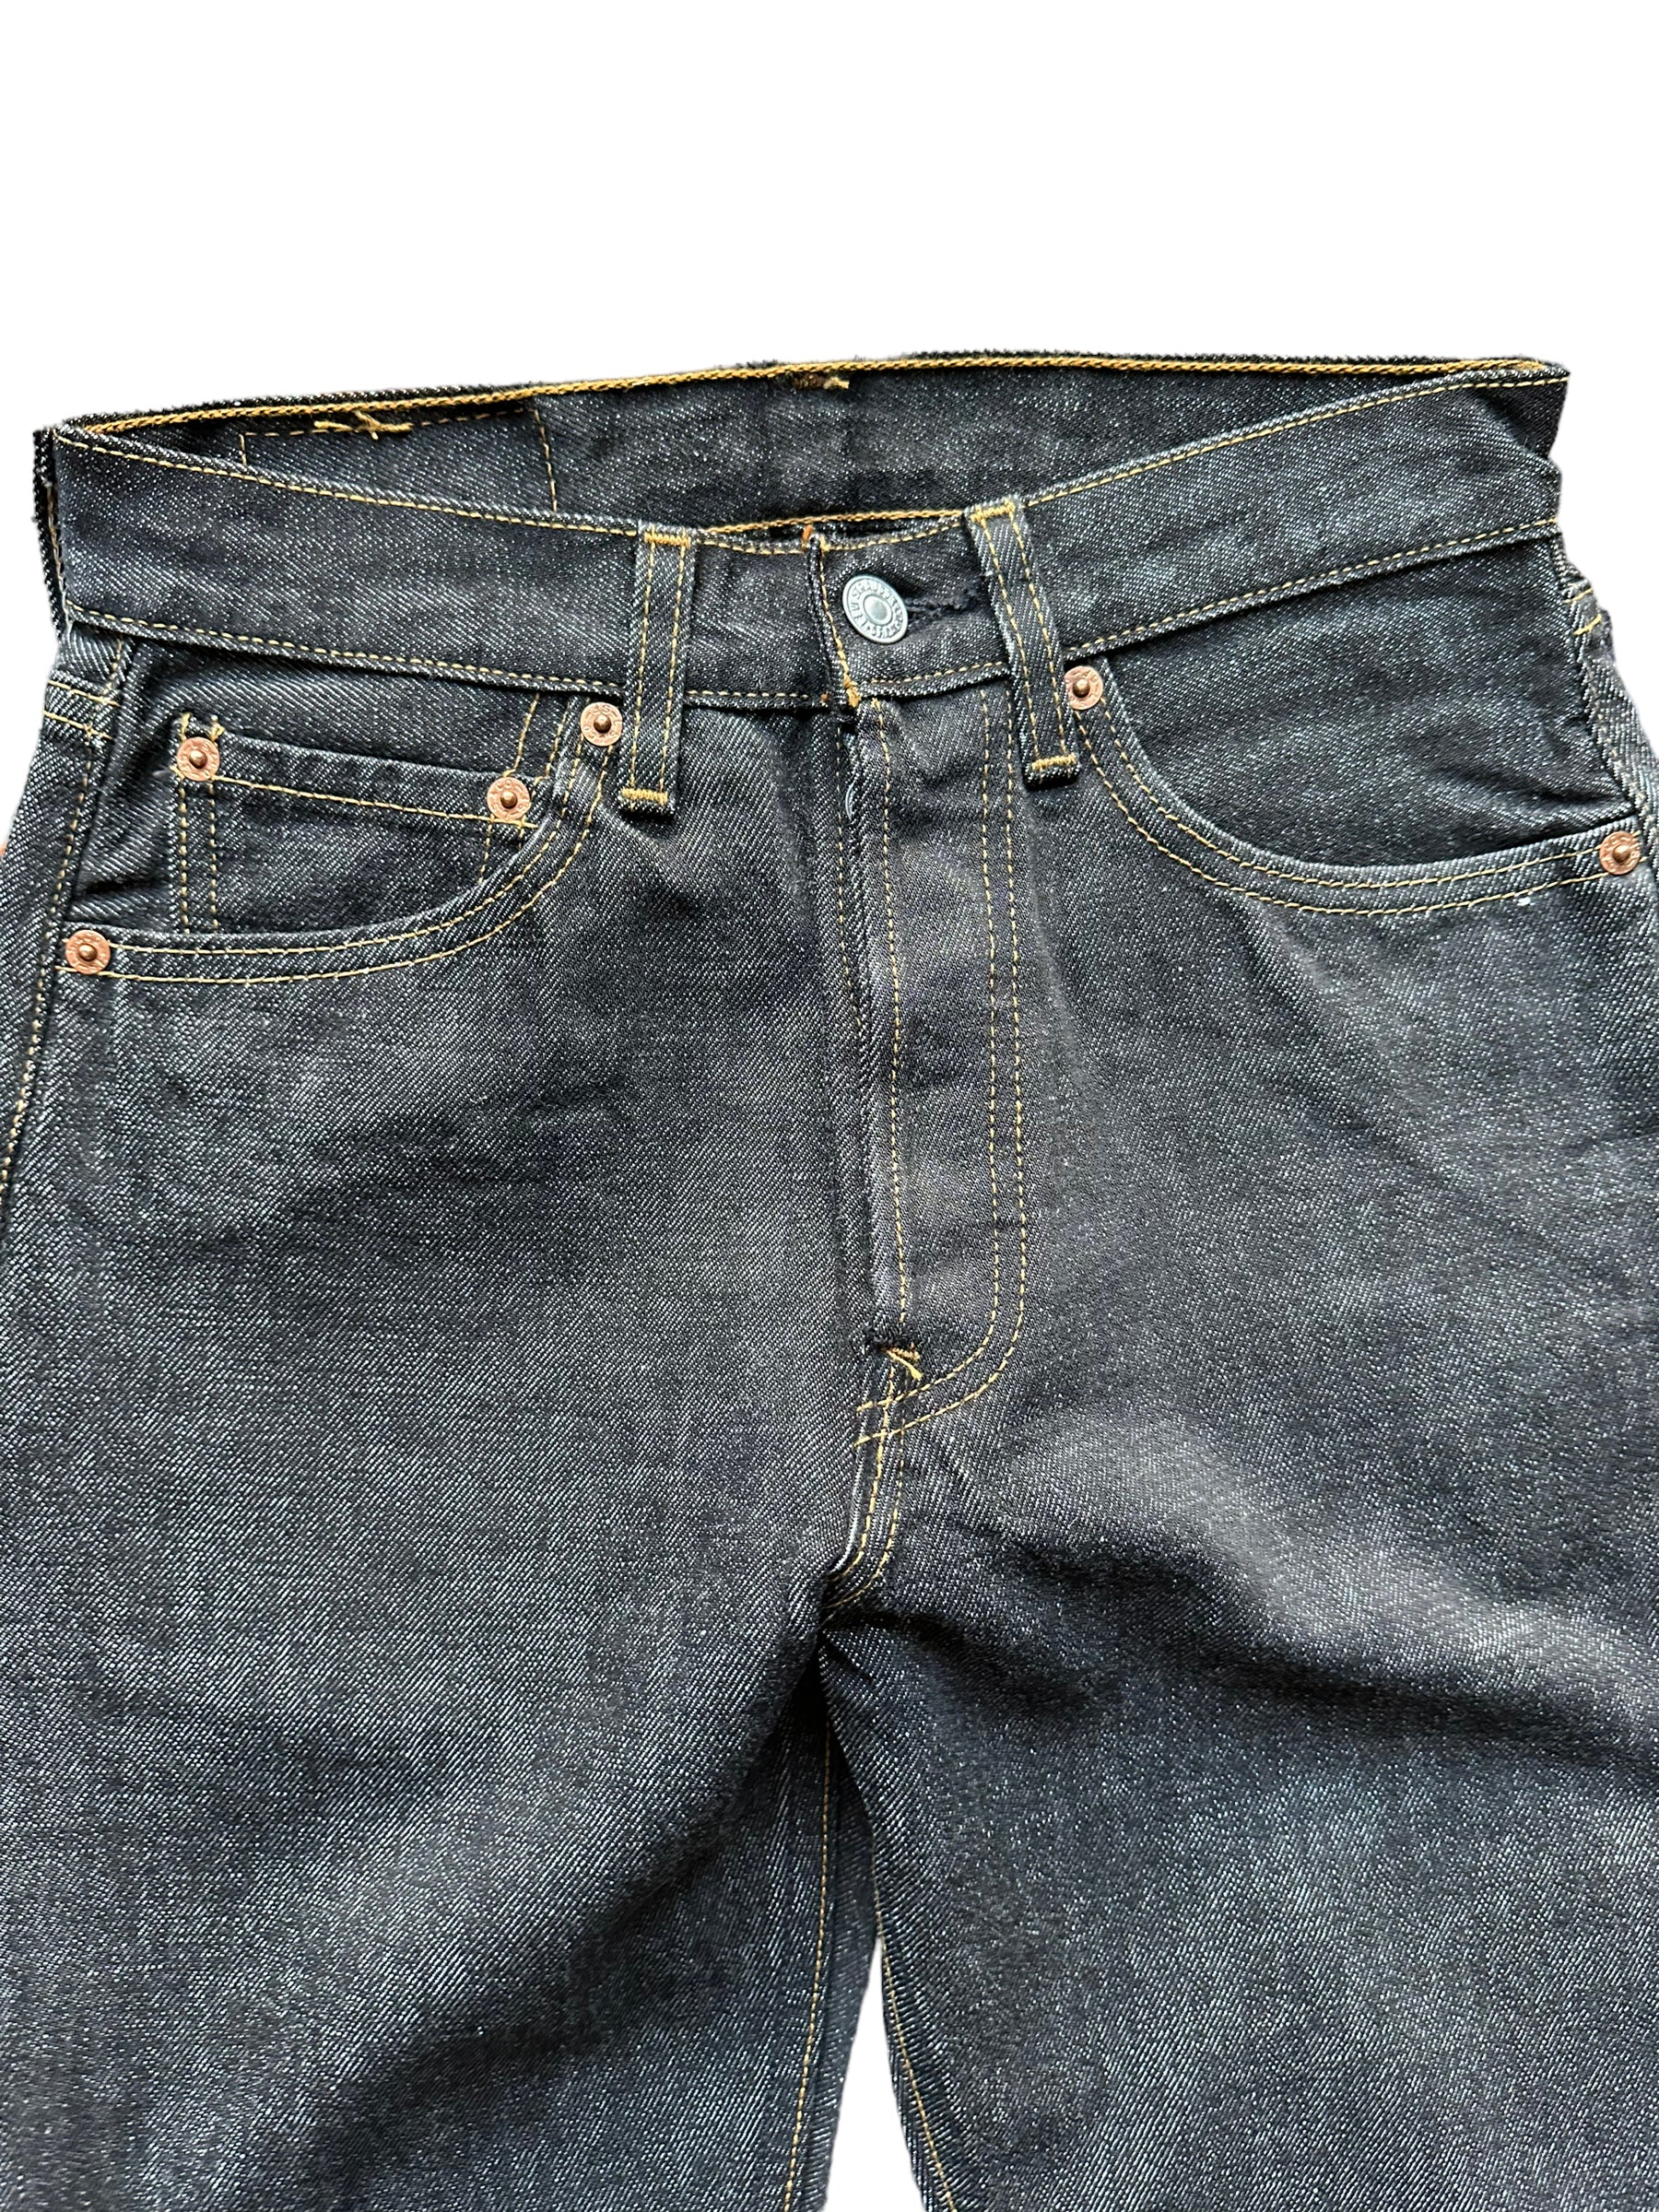 Front waist view of Deadstock 90s USA Levi's 501 Black Jeans 26x33 | Seattle Deadstock Vintage Jeans | Barn Owl Vintage Denim